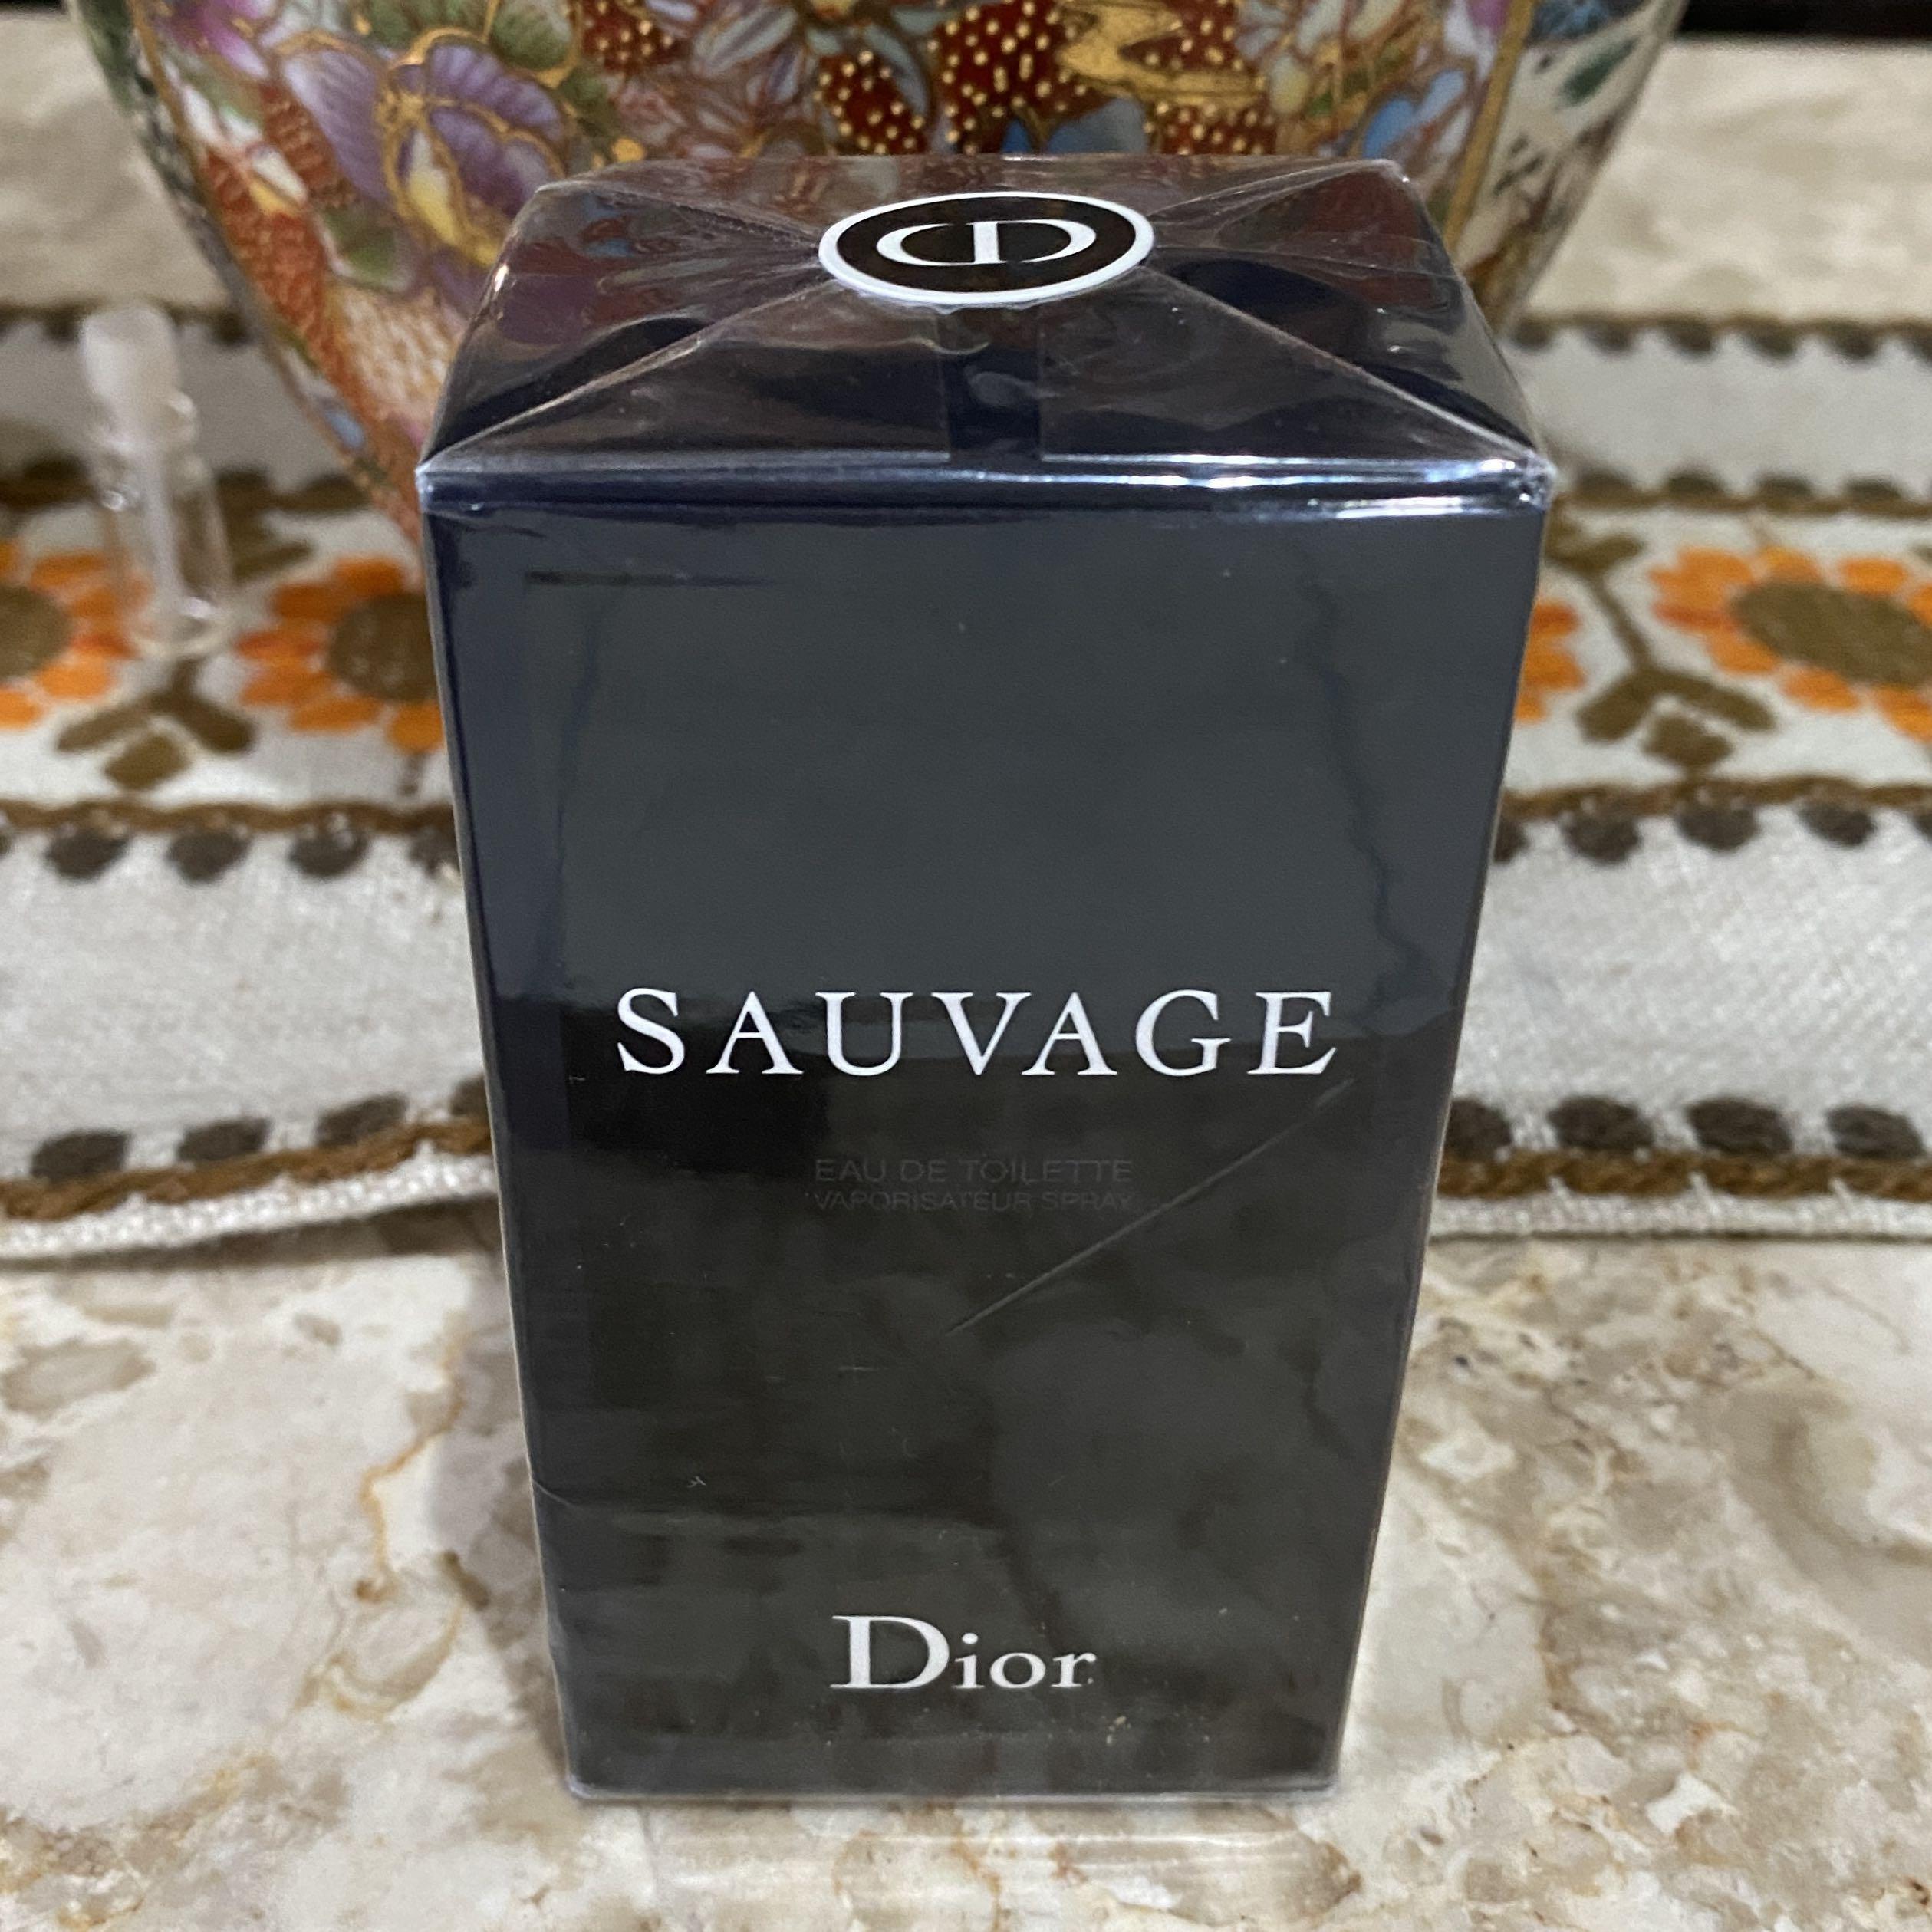 sauvage dior perfume